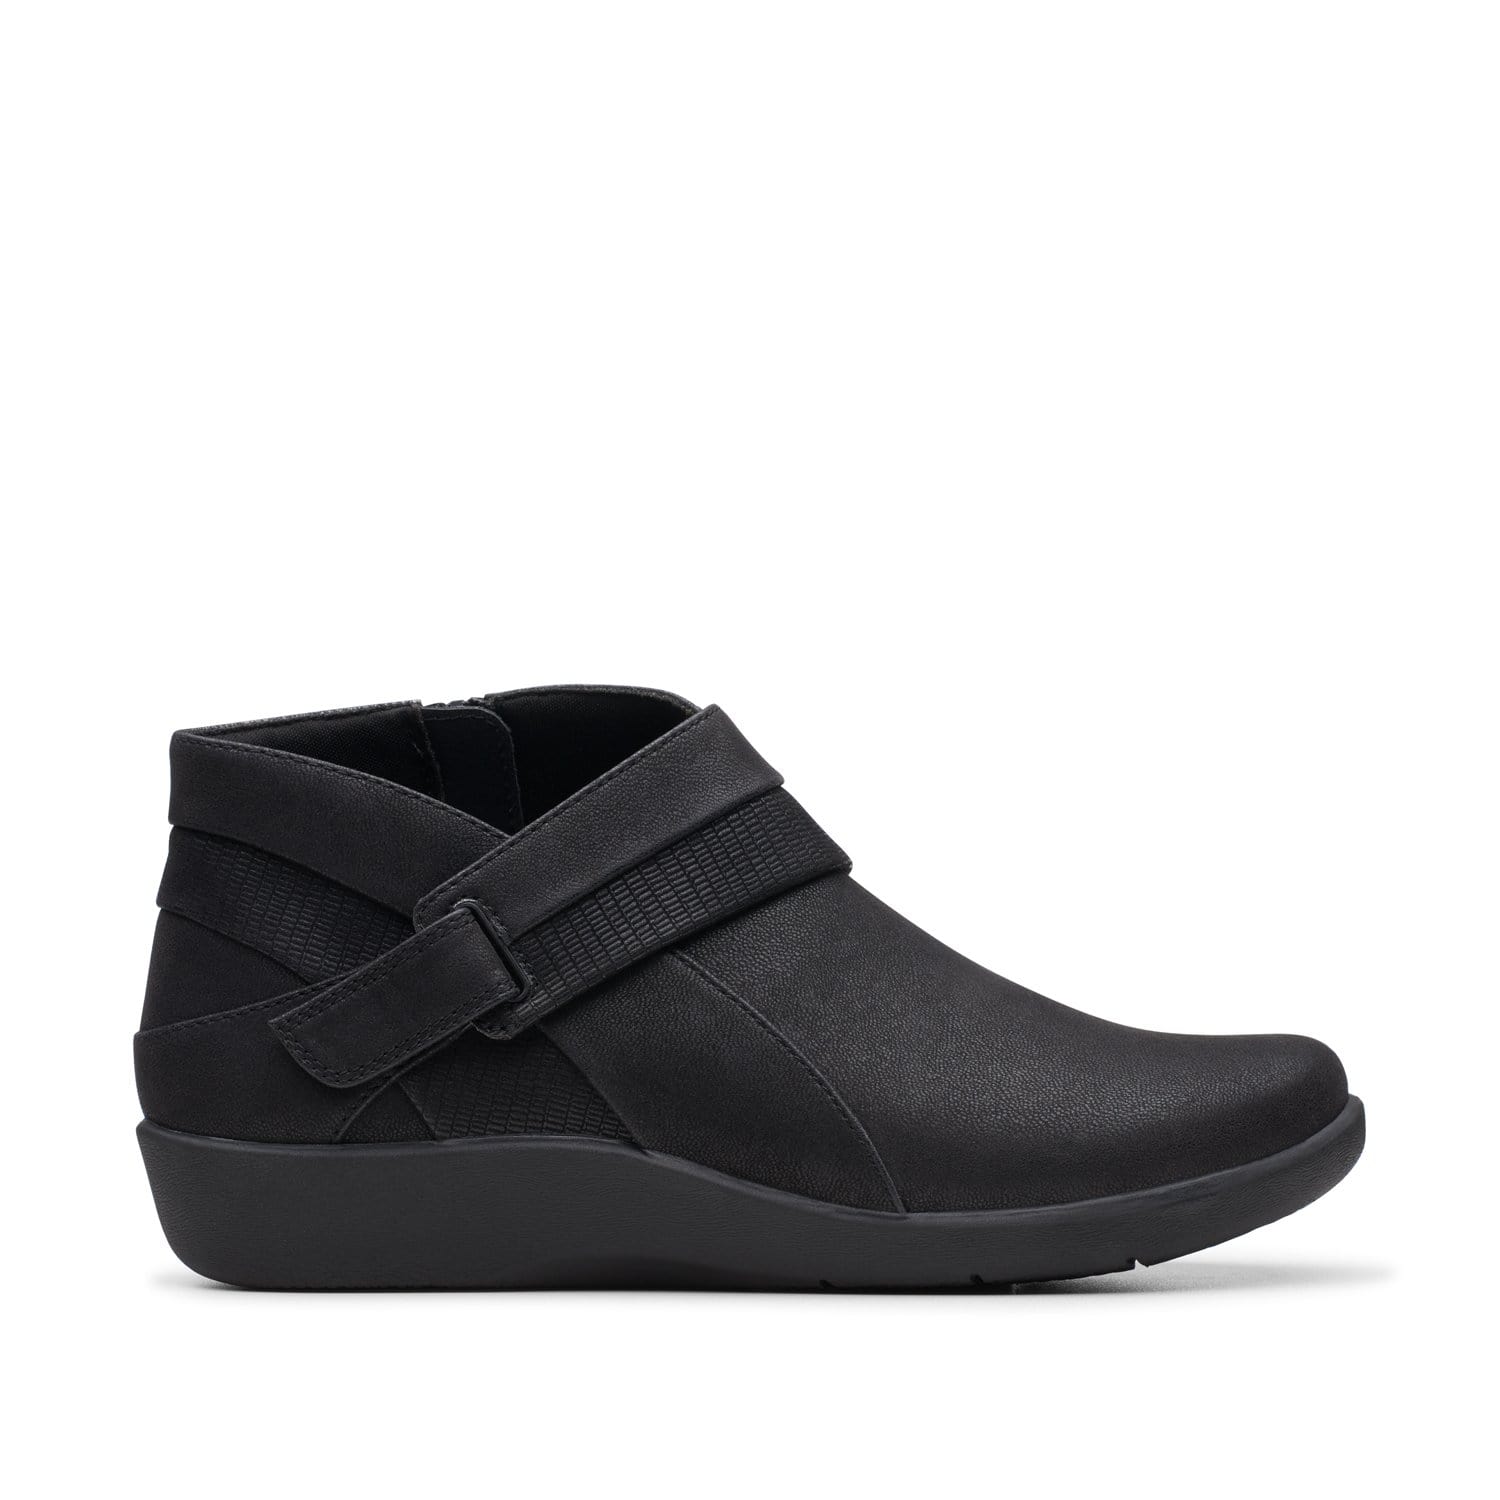 Clarks-Sillian-Rani-Women's-Boots-Black 